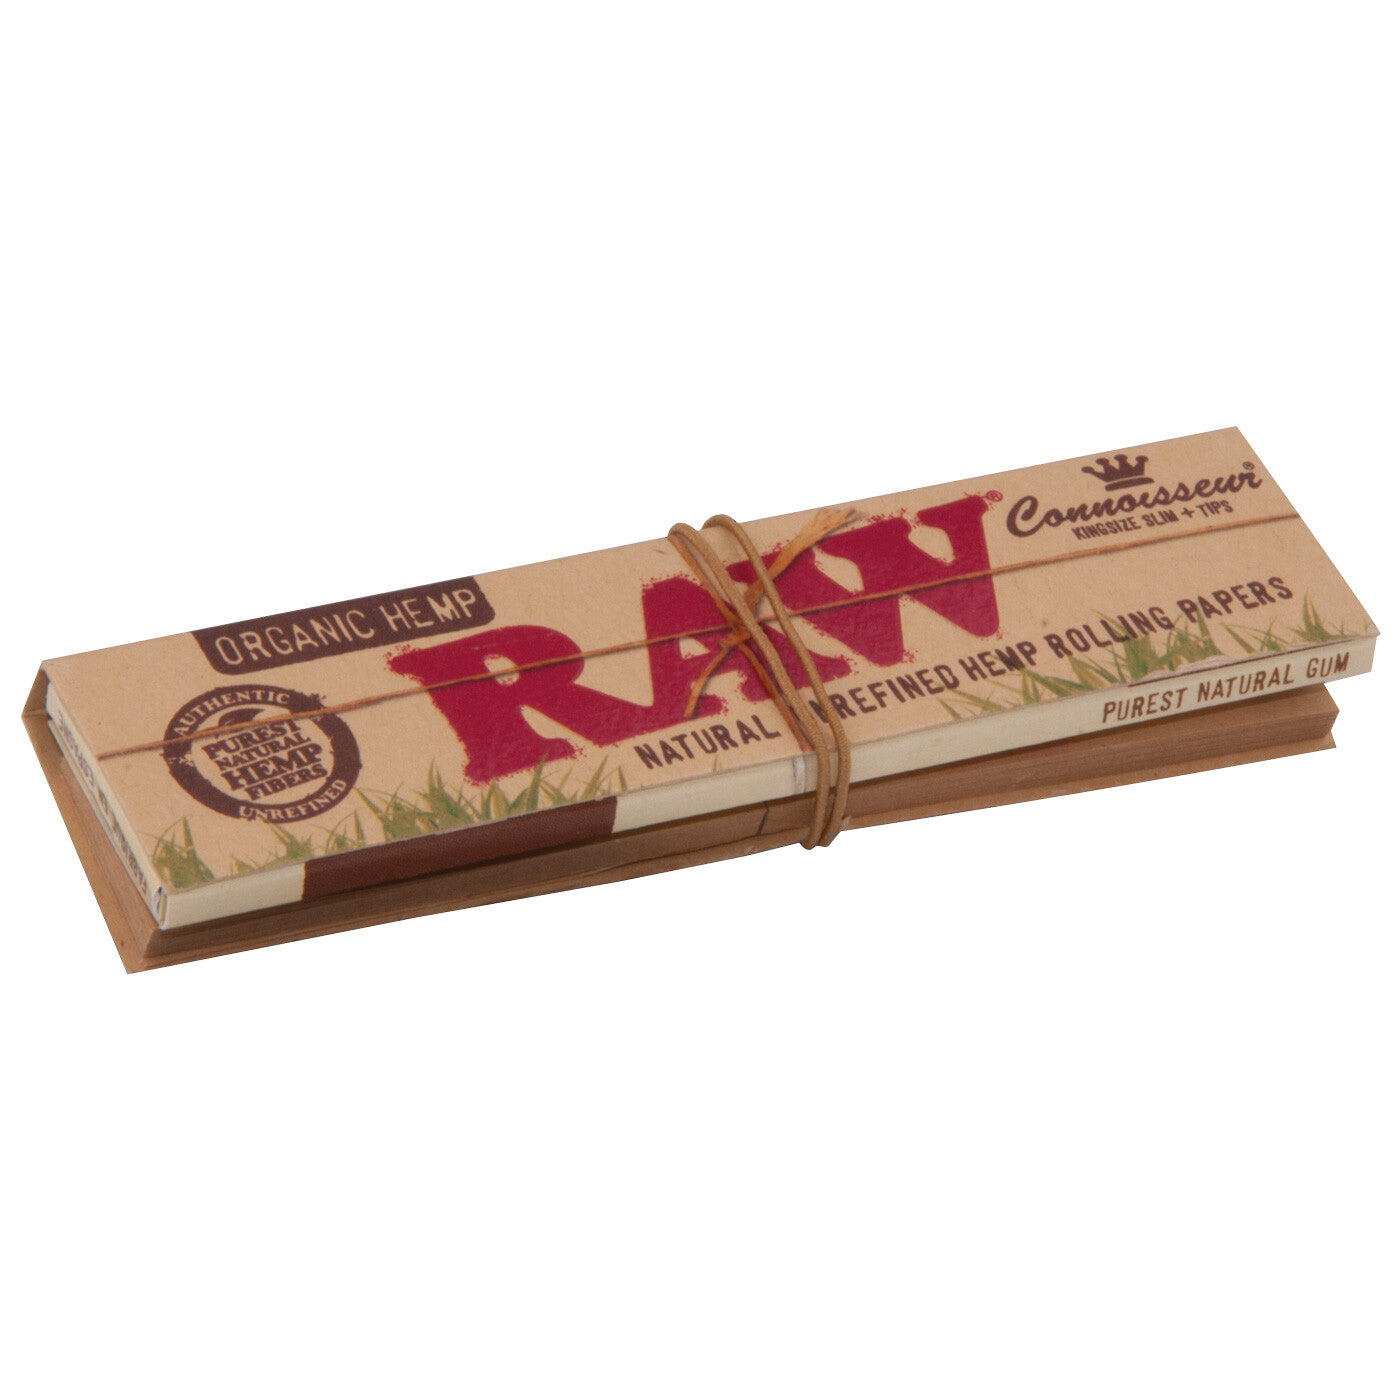 Raw Organic Hemp Connoisseur King Size Slim 1 Pc